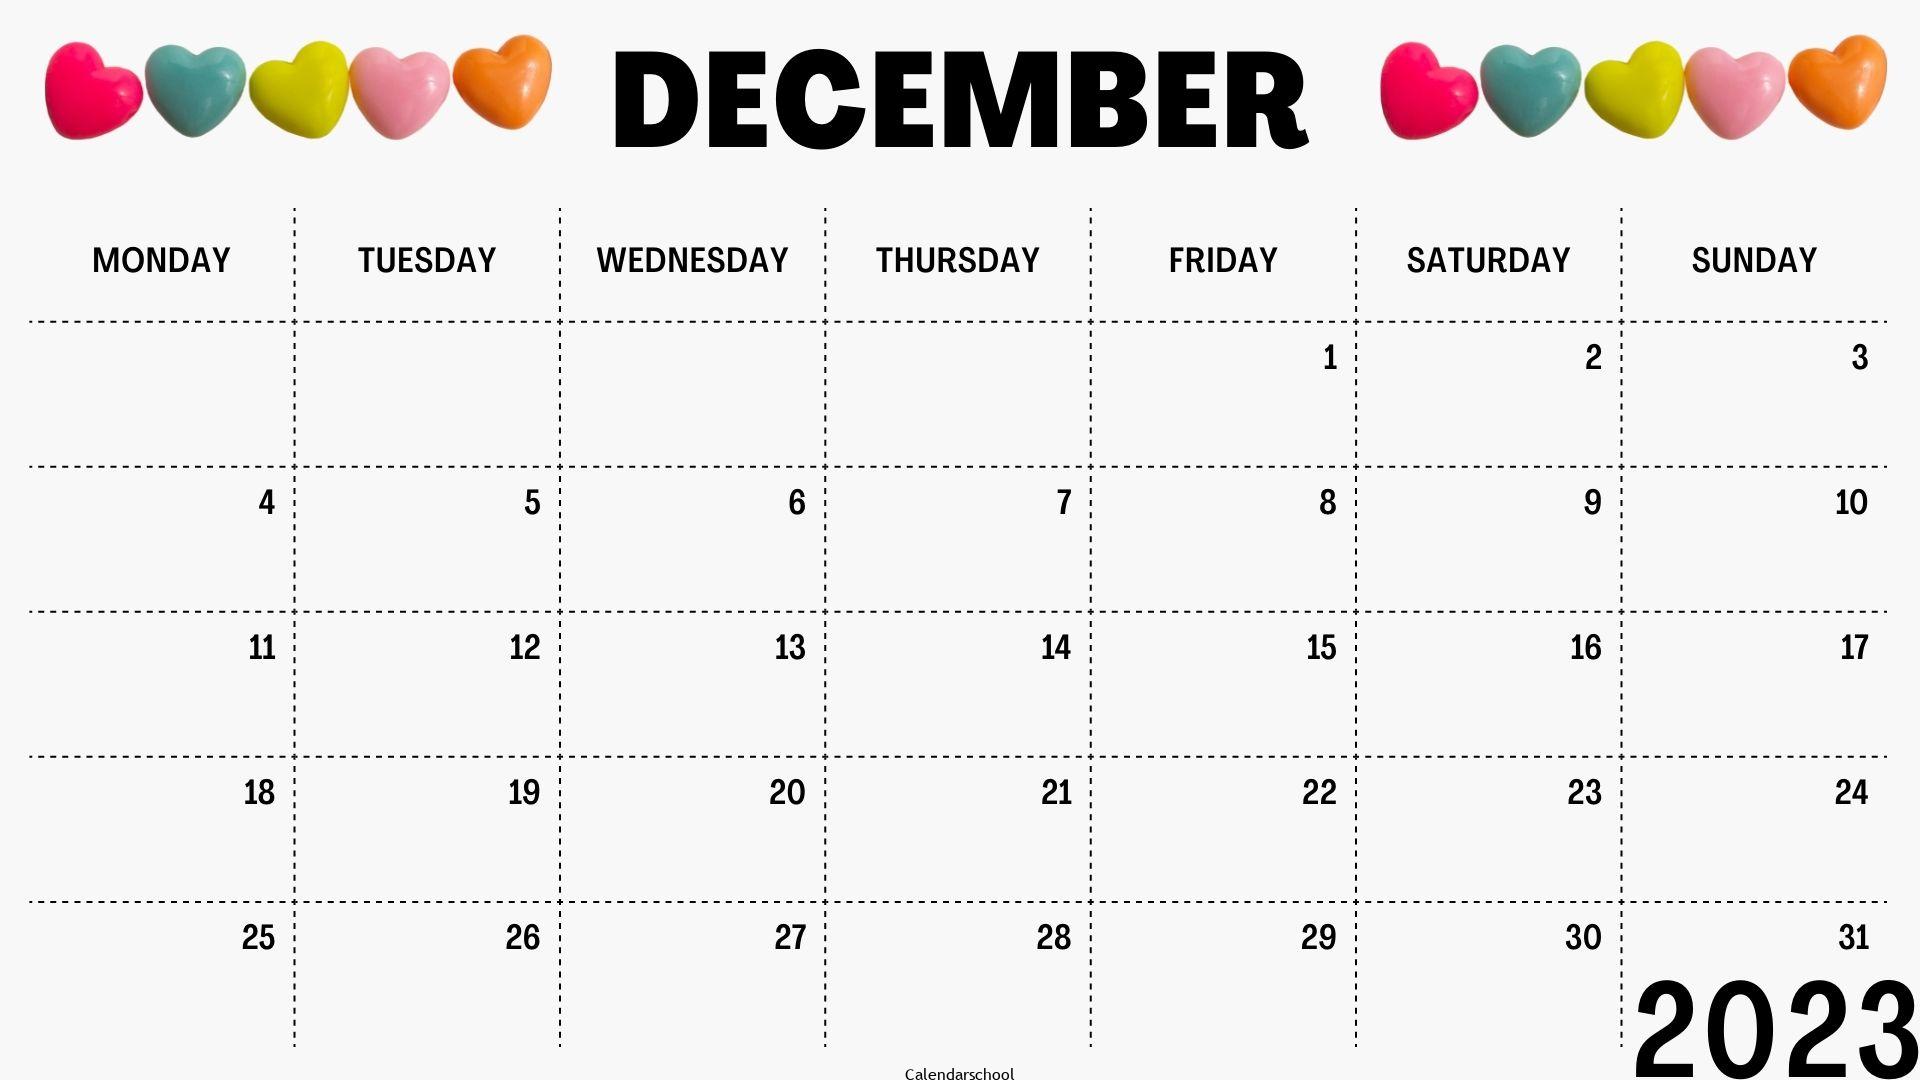 December 2023 Monthly Blank Calendar